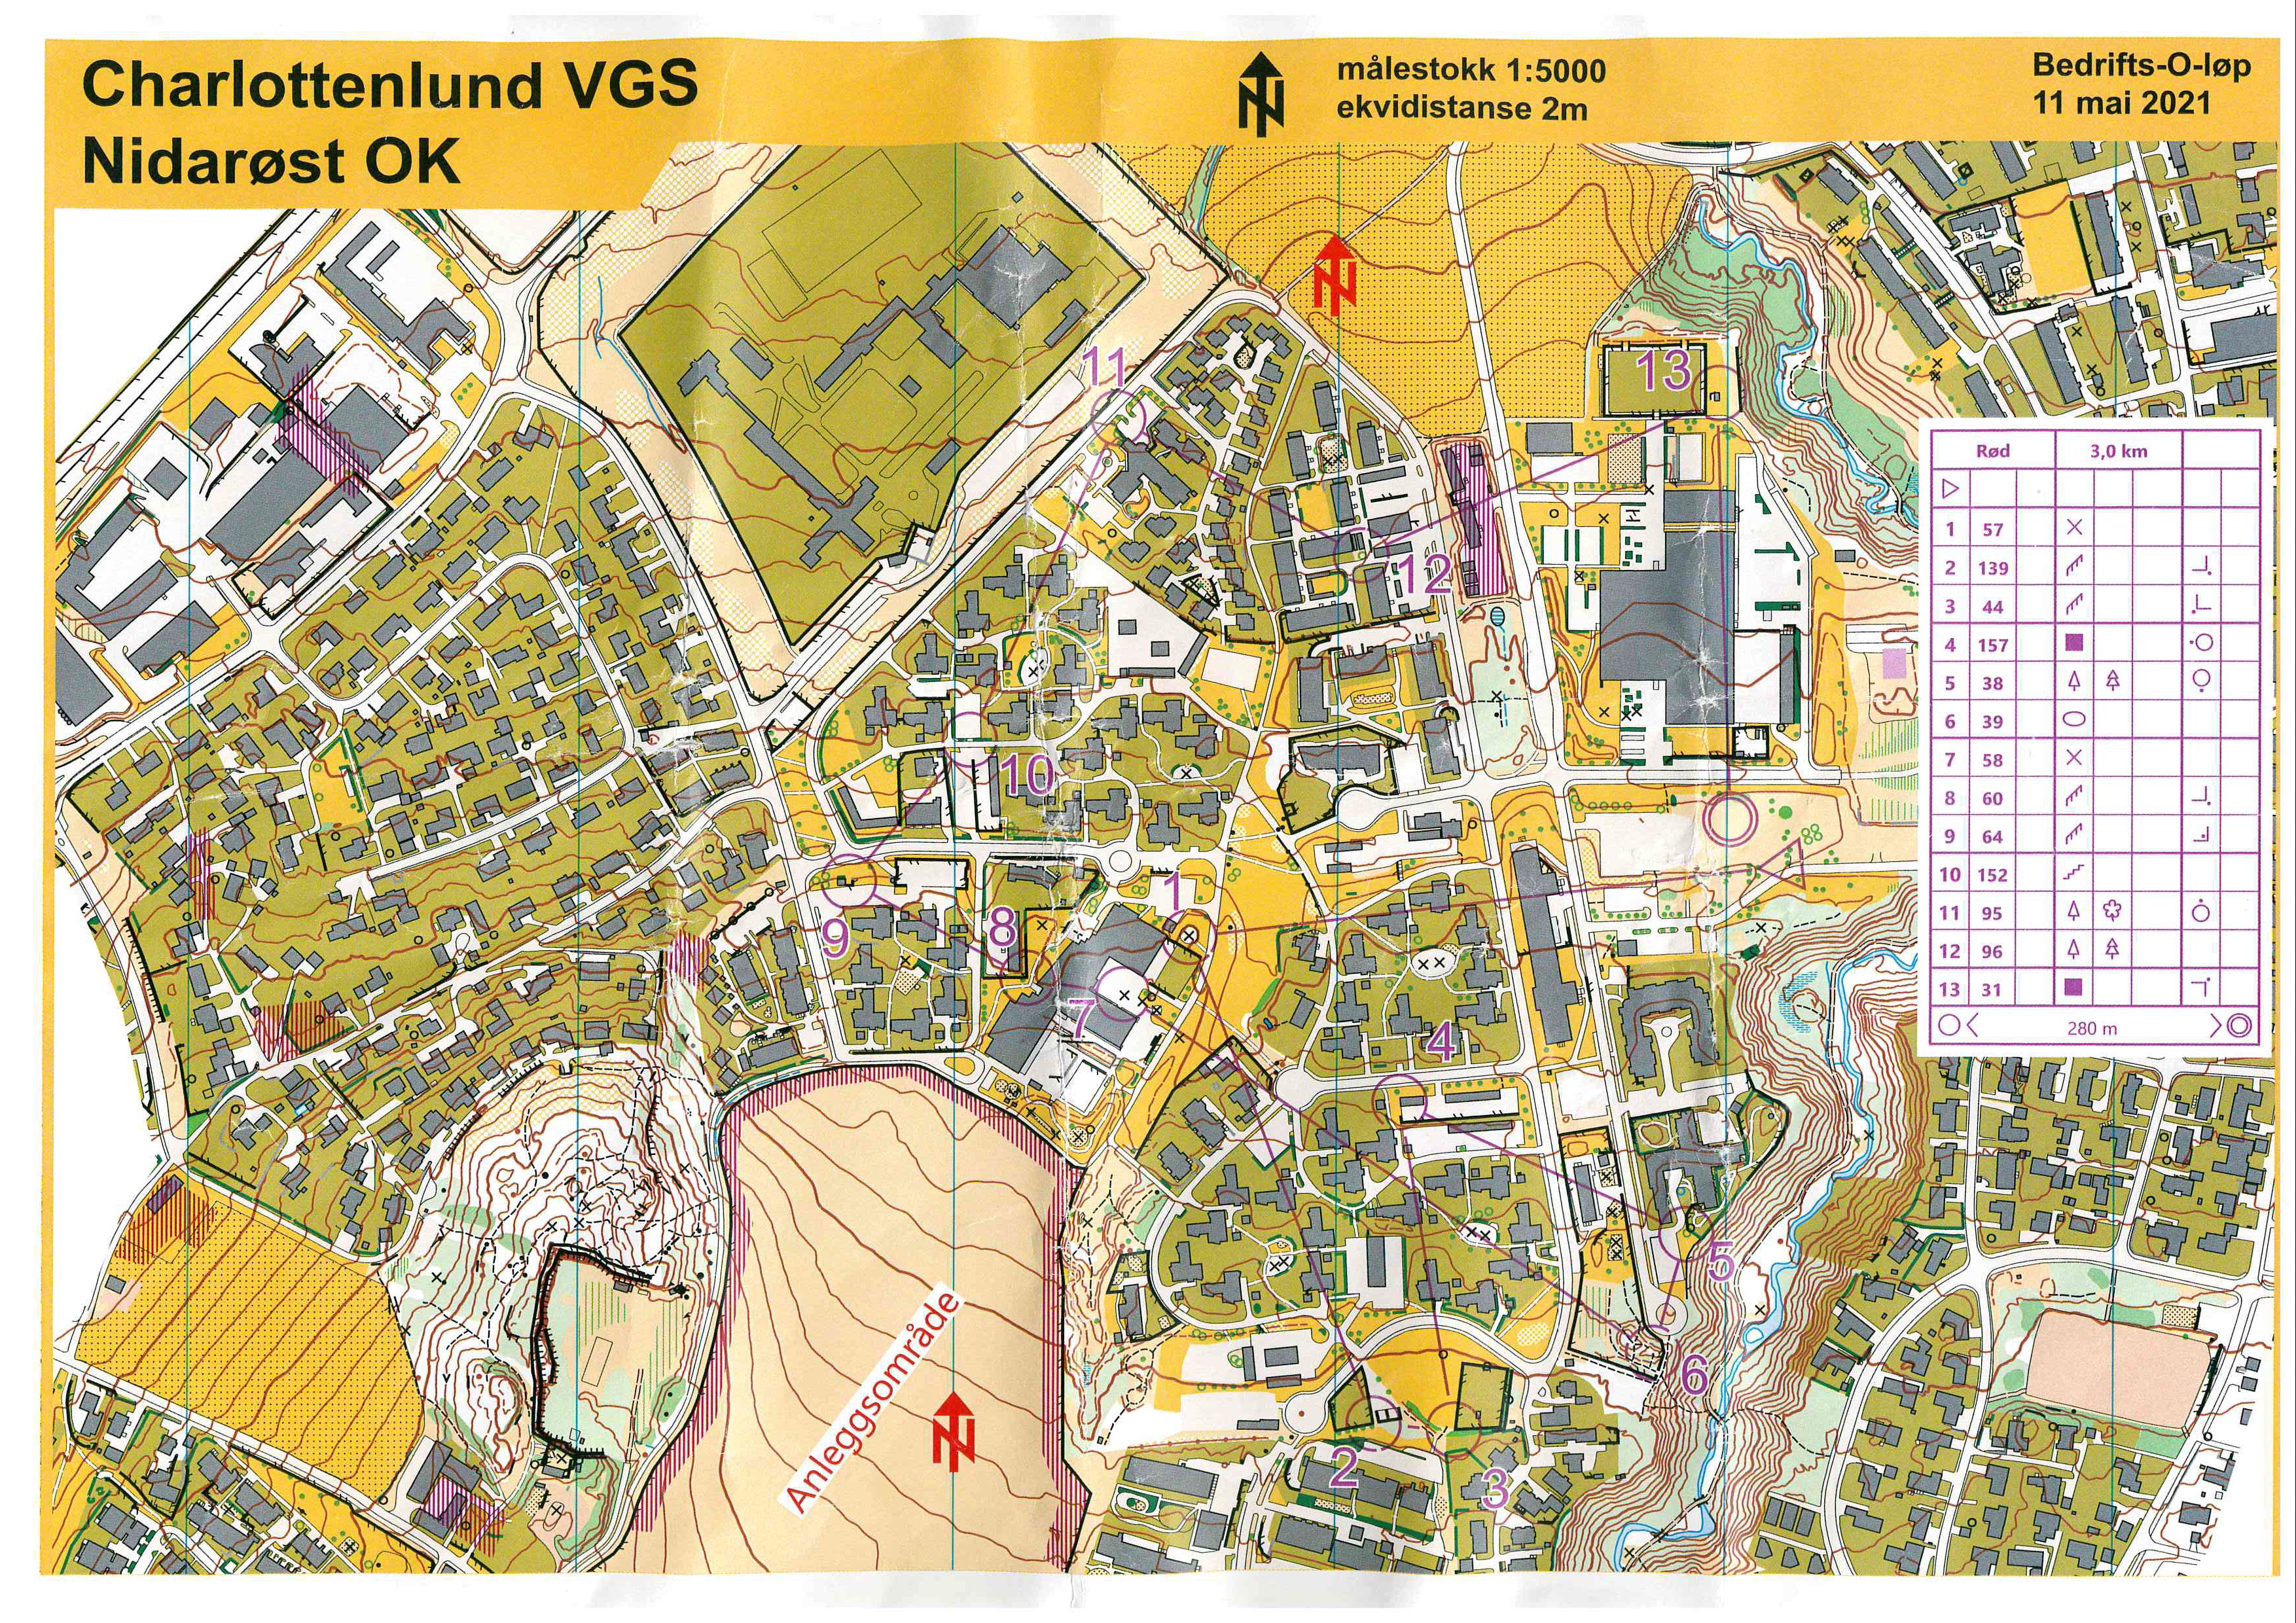 Bedrifts-o-løp, sprint, Charlottenlund (2021-05-11)